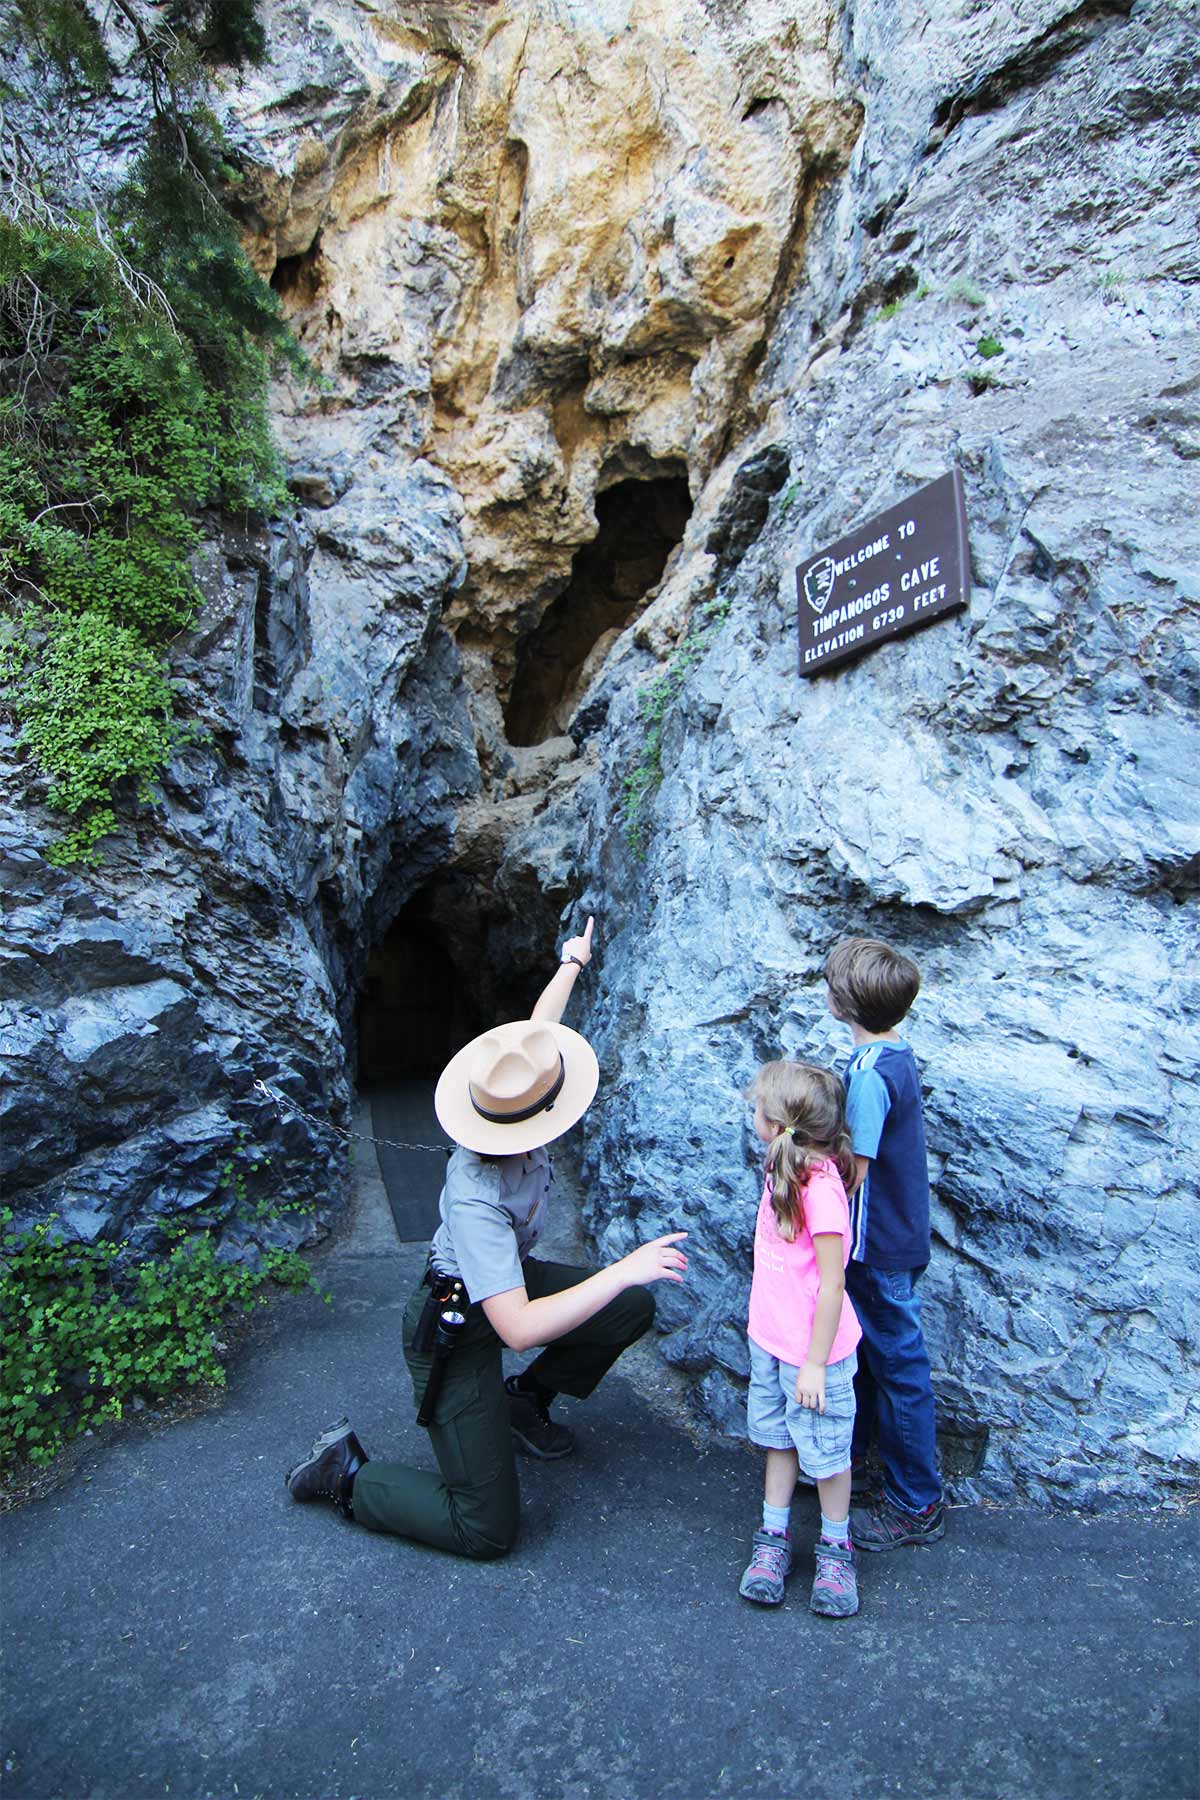 timpanogos cave national monument utah